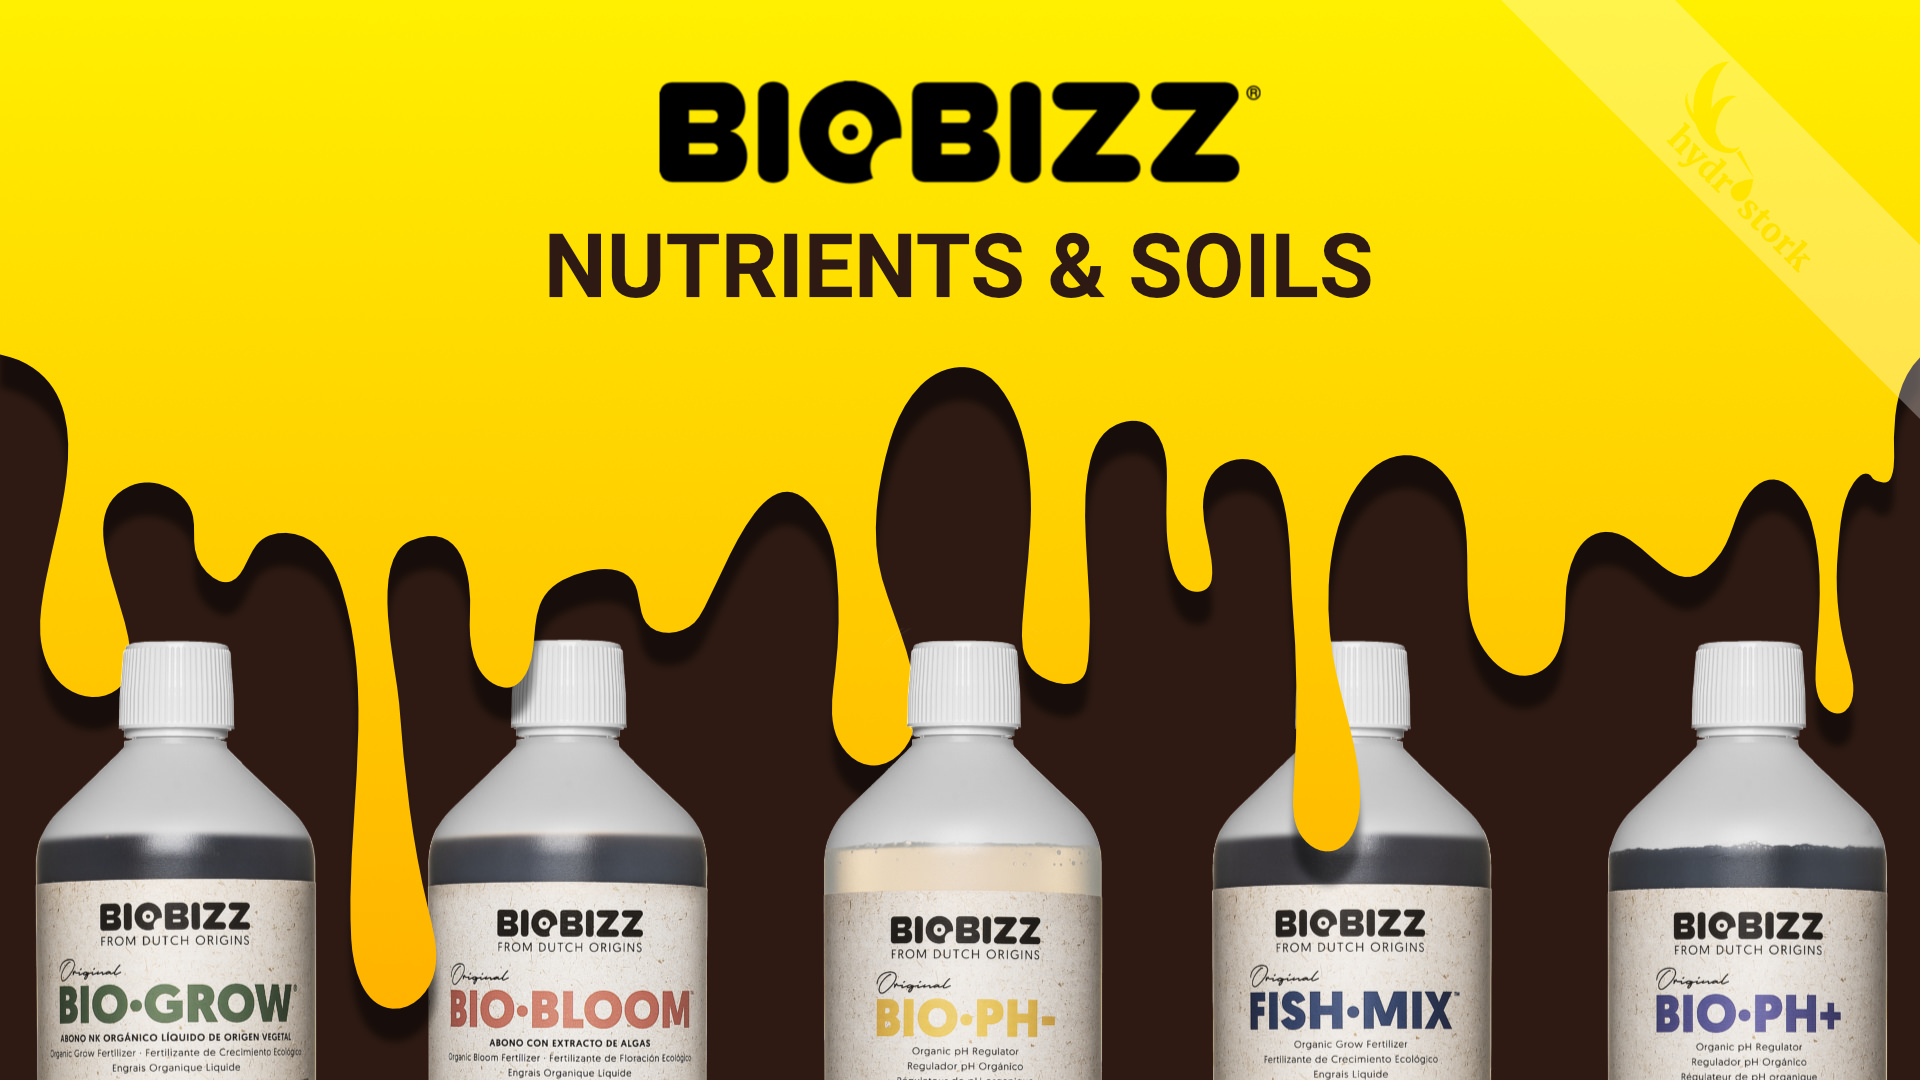 Biobizz Nutrients and Soils Guide